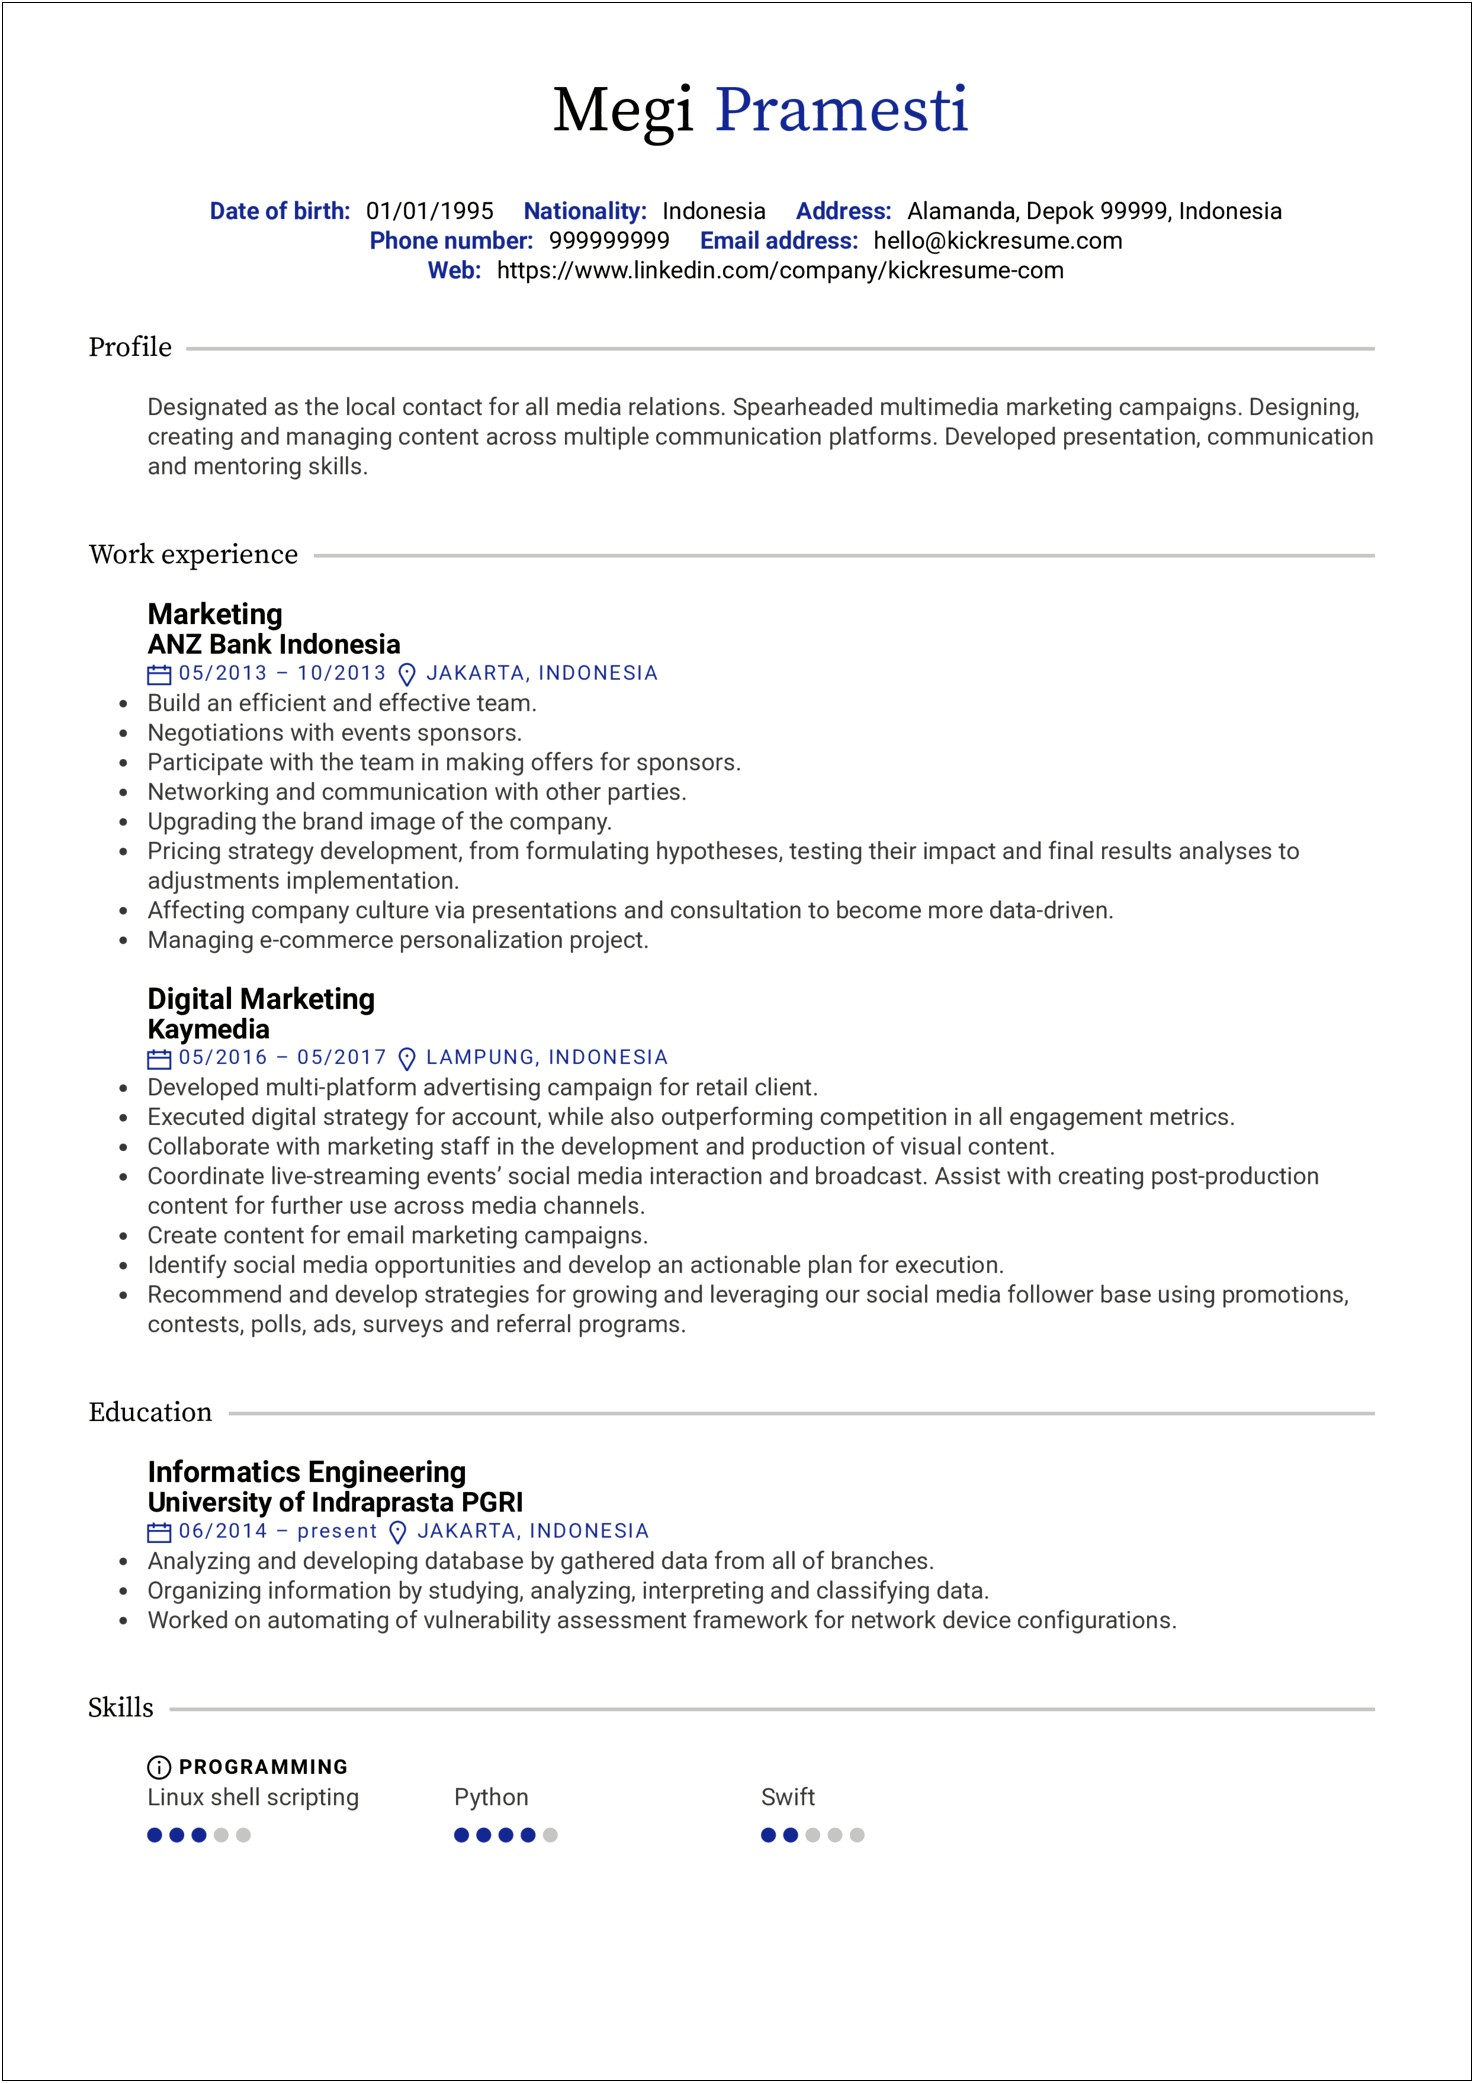 Resume Summary Sample For Marketing Web Design